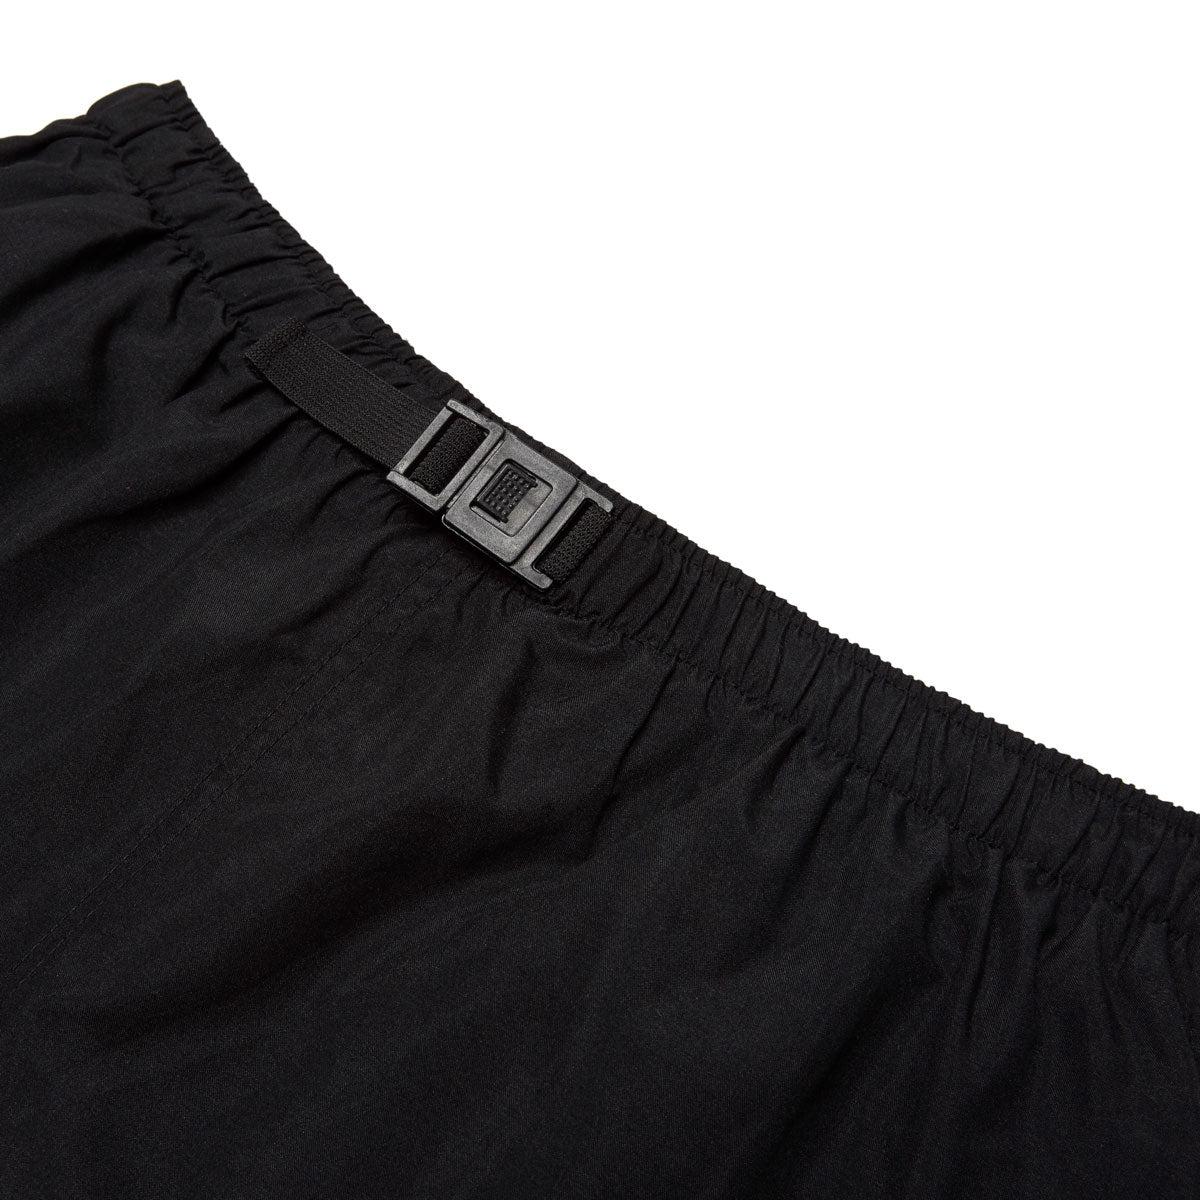 CCS Swim Club Hybrid Shorts - Black image 3